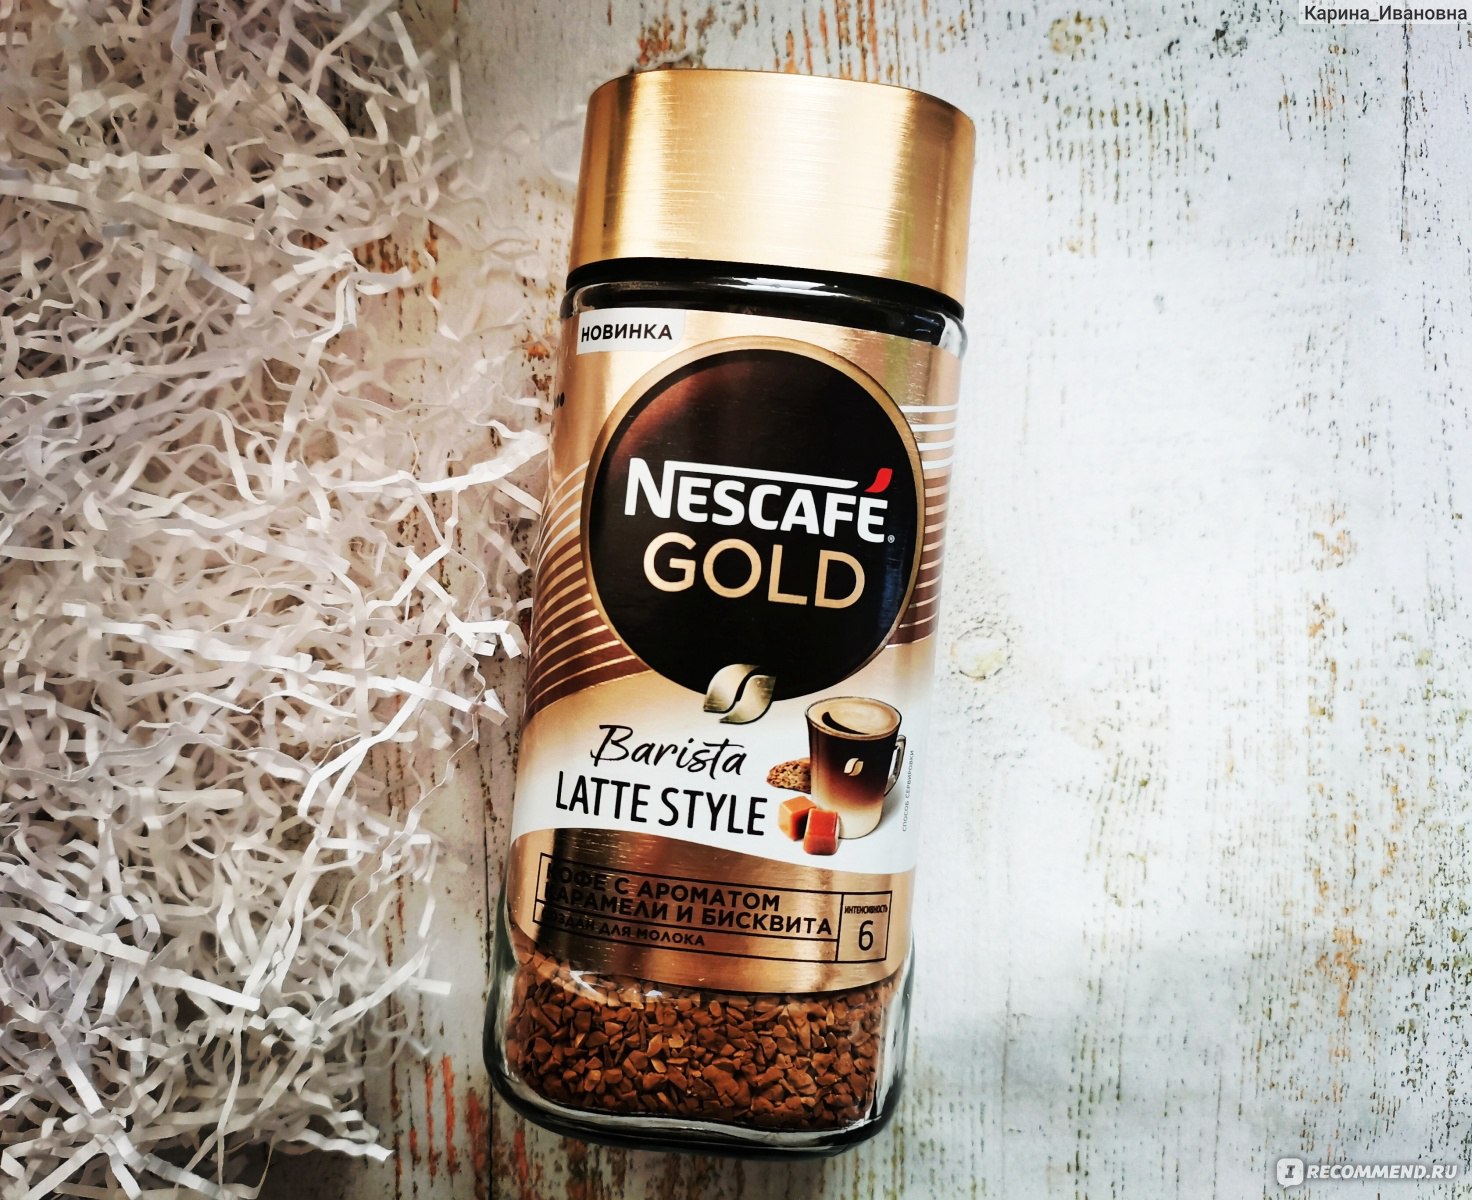 Nescafe gold barista style. Нескафе Голд бариста латте. Кофе Нескафе латте стайл. Кофе Nescafe Gold Barista Latte Style. Nescafe Gold кофе с ароматом карамели.